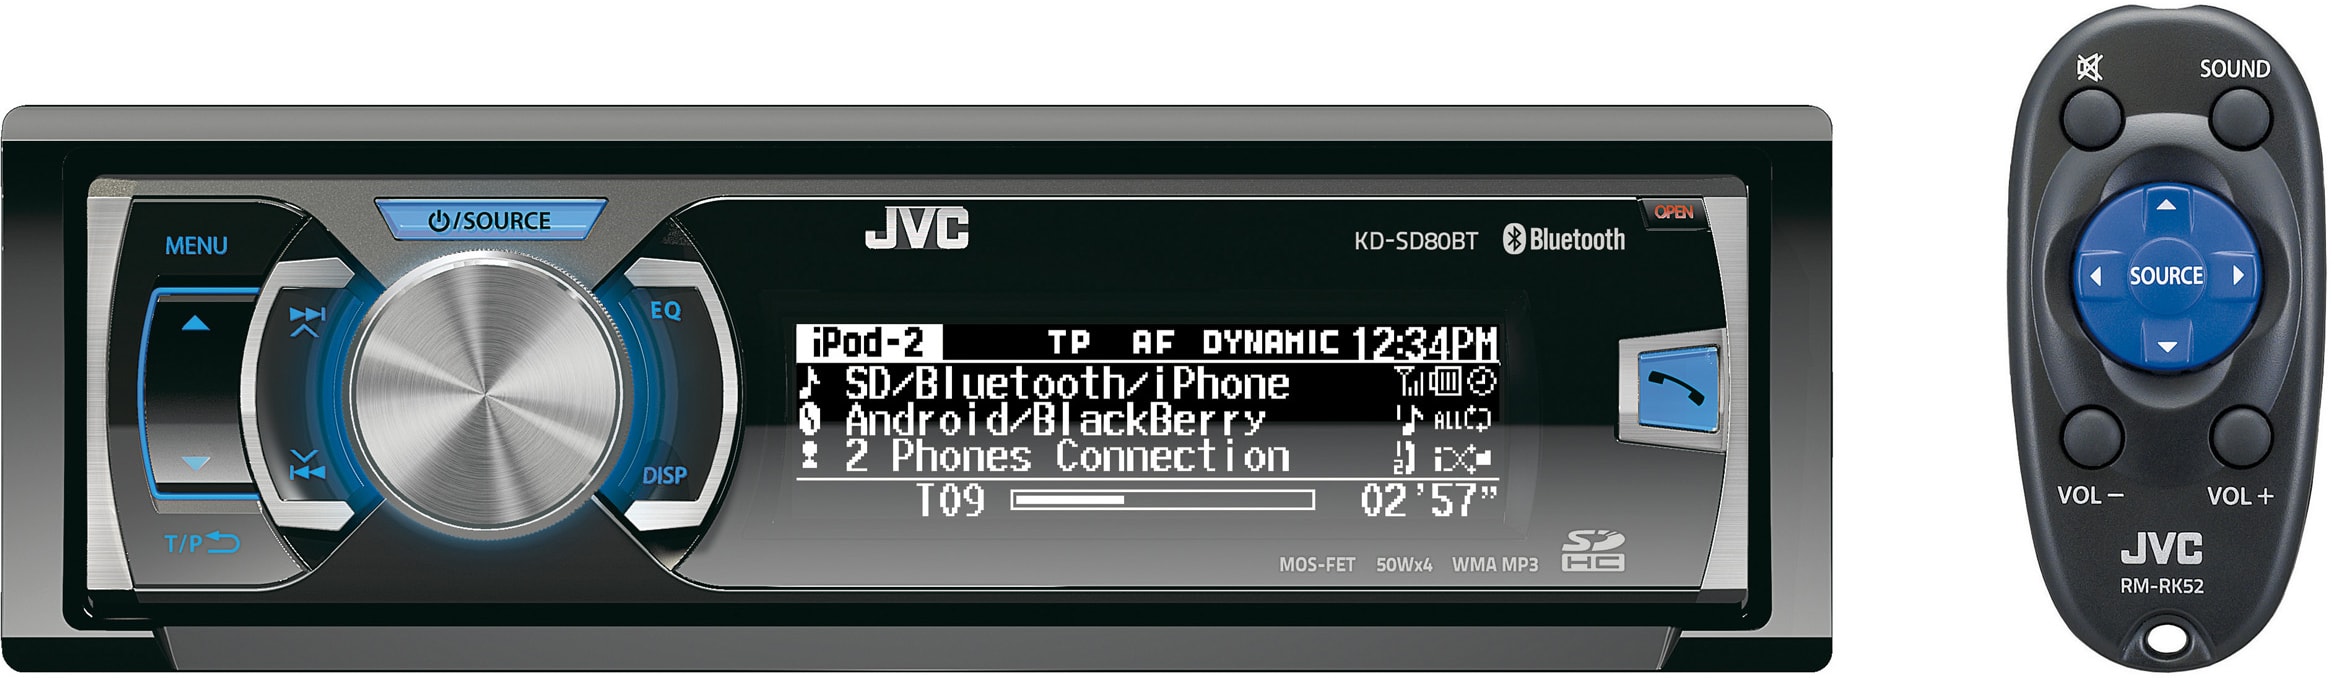 JVC - Autoradio CD/USB KD-SD80BTE